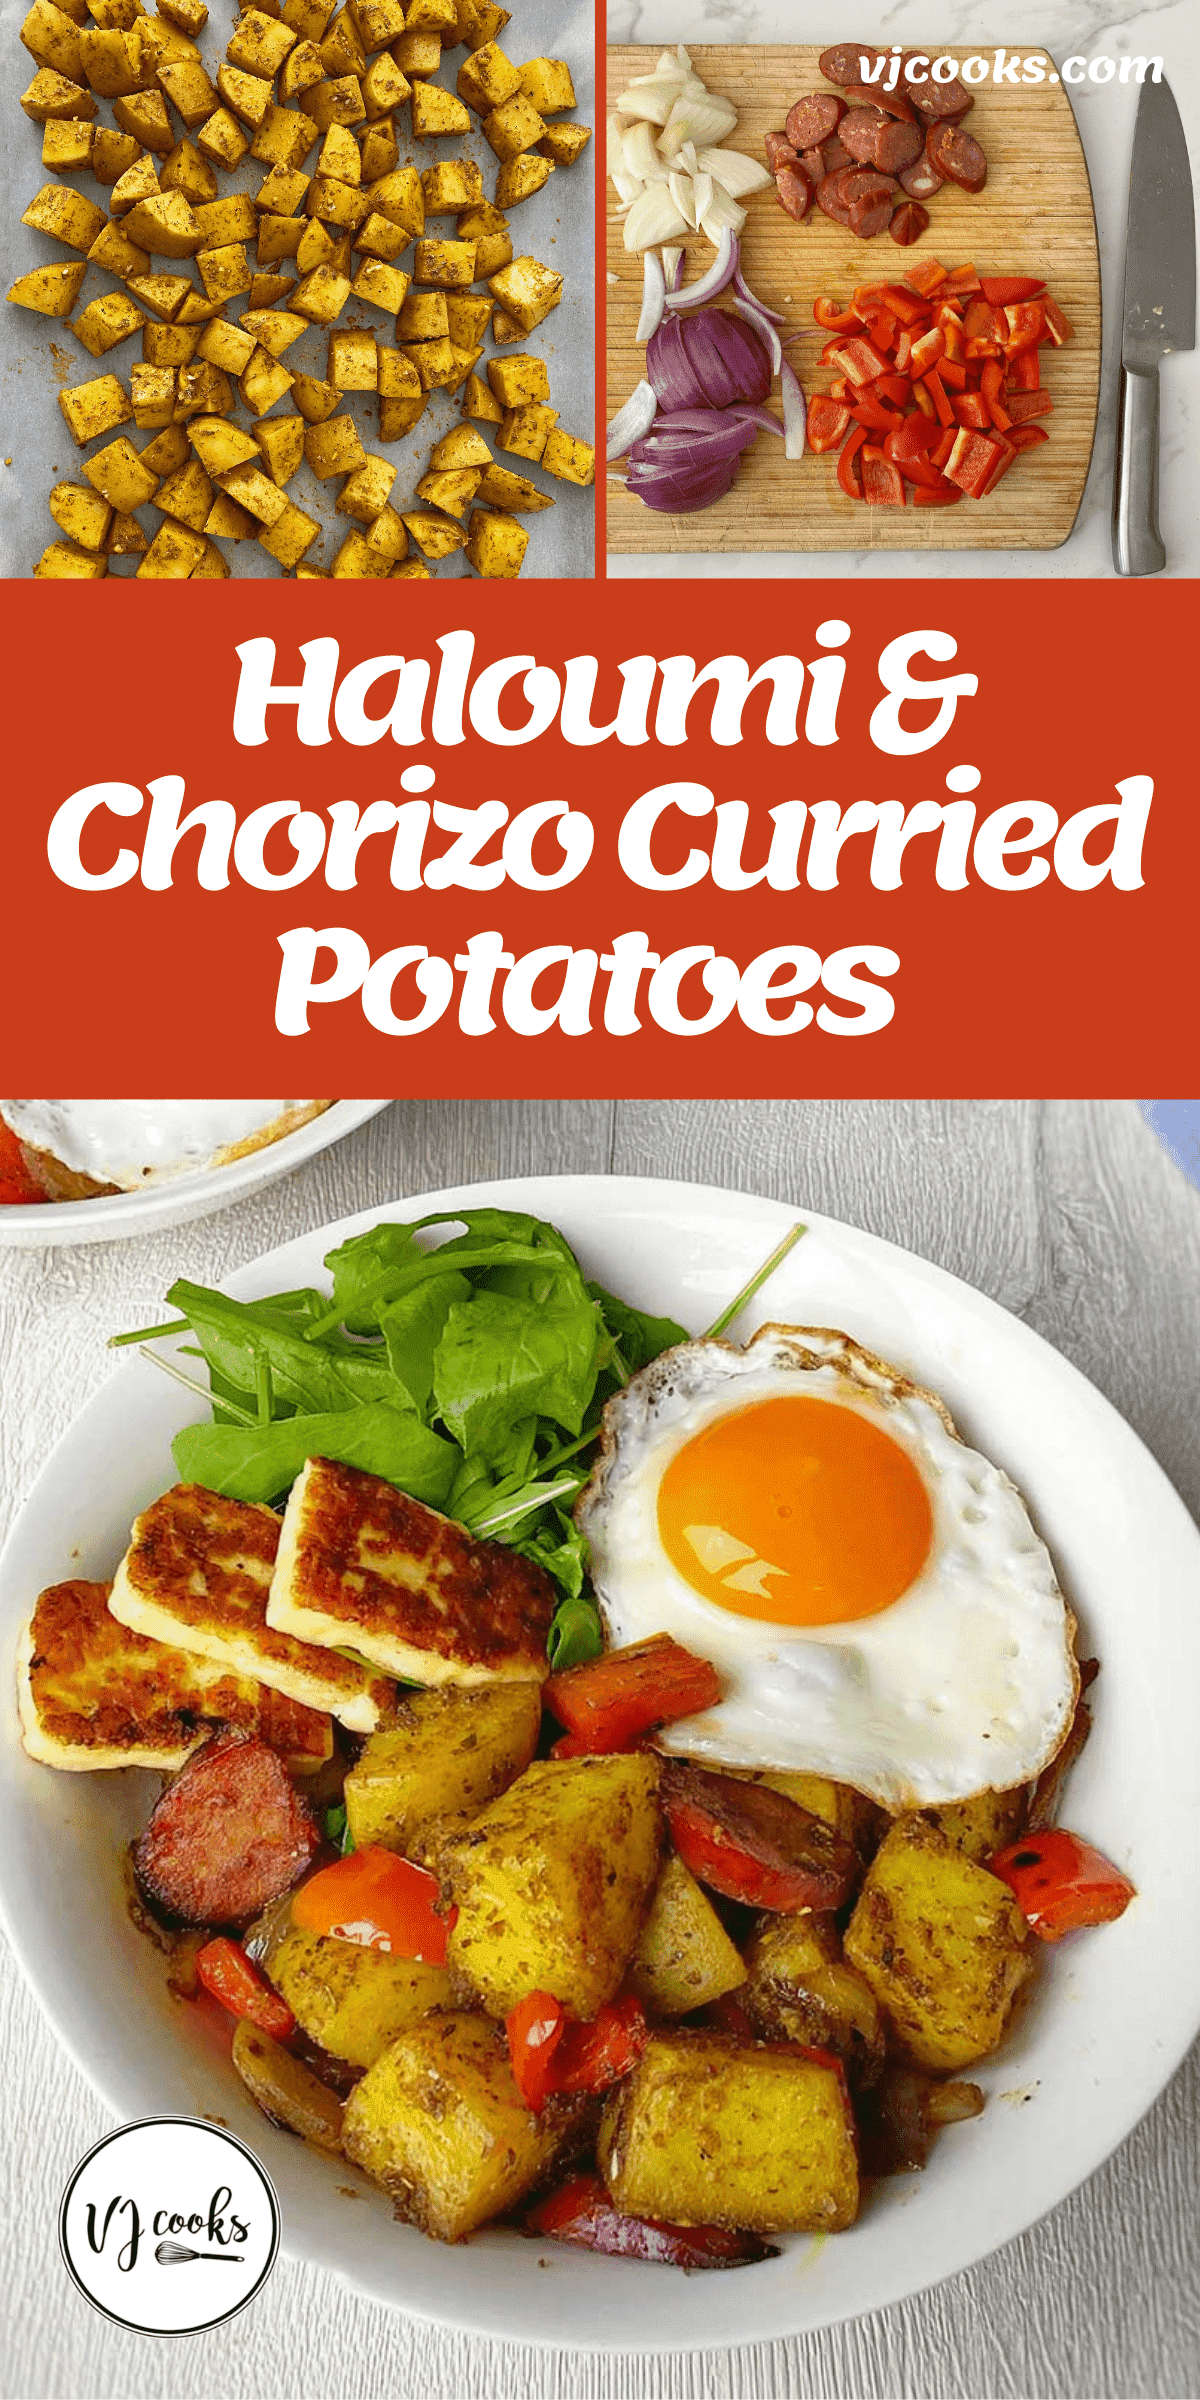 The process of making Haloumi & Chorizo Curried Potatoes